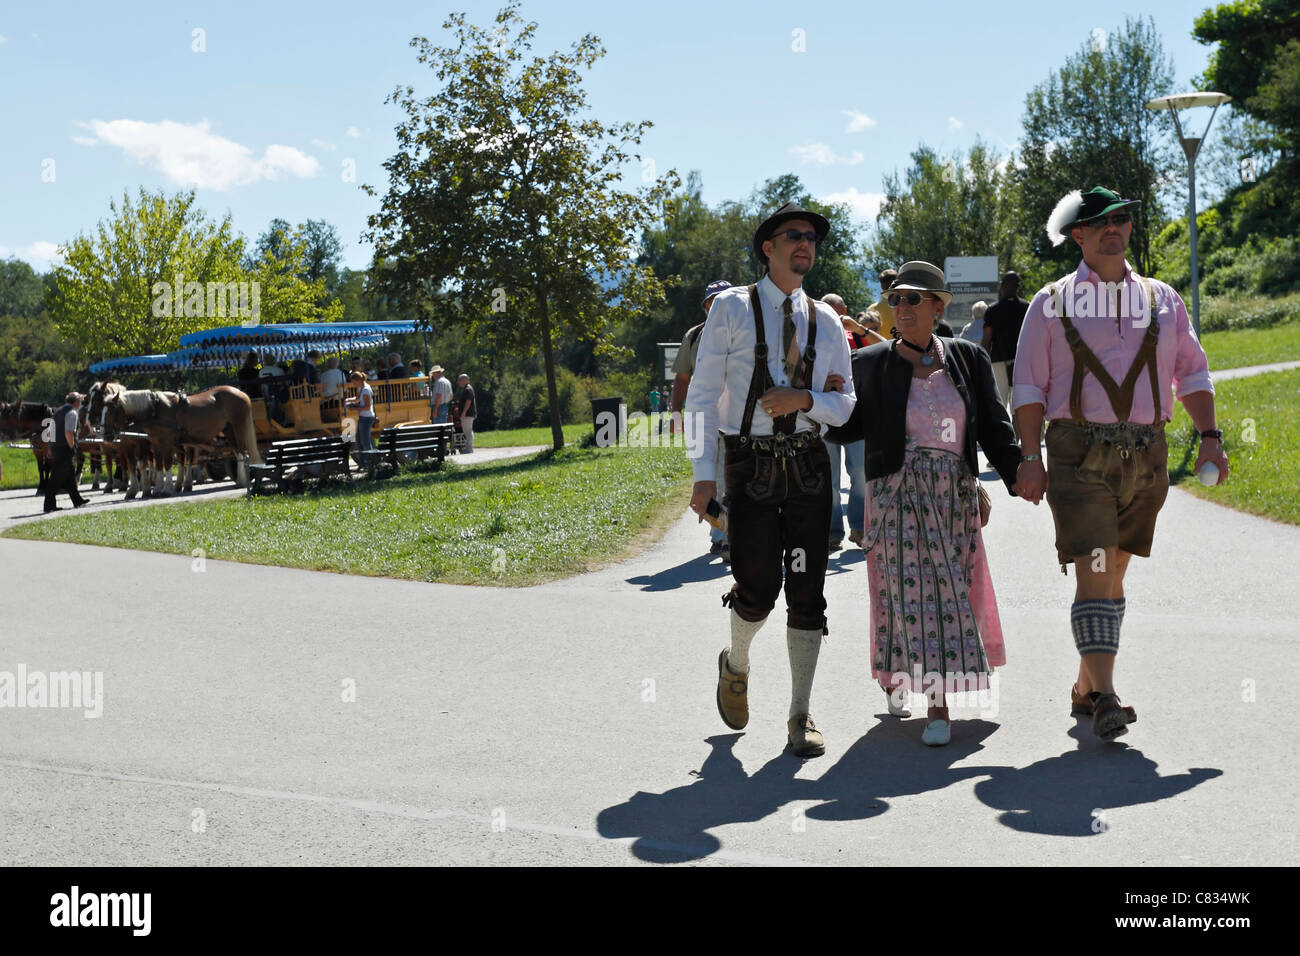 People in traditional Bavarian Dress, Herreninsel Chiemgau Upper Bavaria Germany Stock Photo